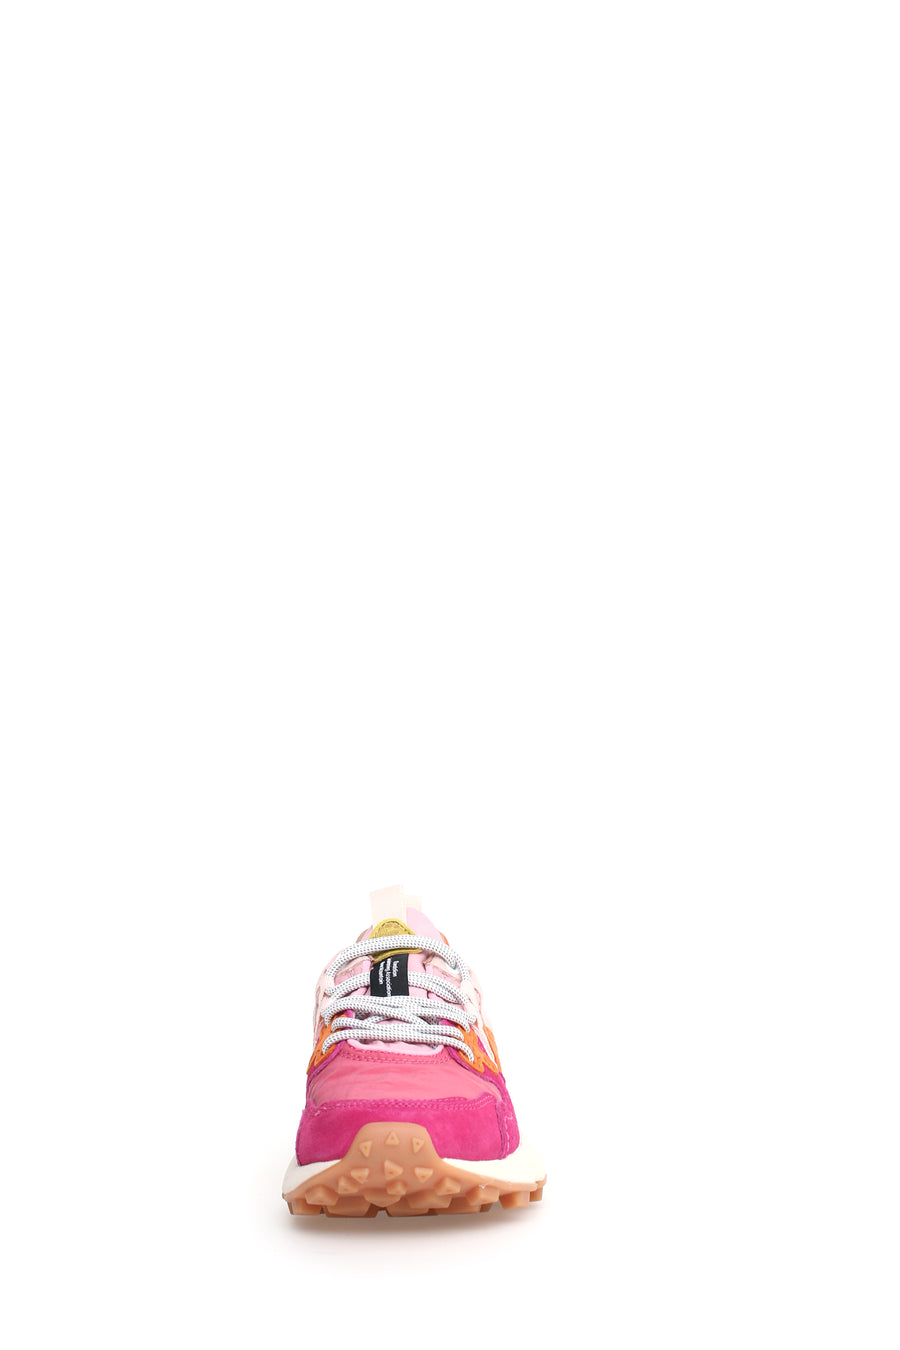 Yamano 3 Woman Suede/Nylon Fuchsia-Pink